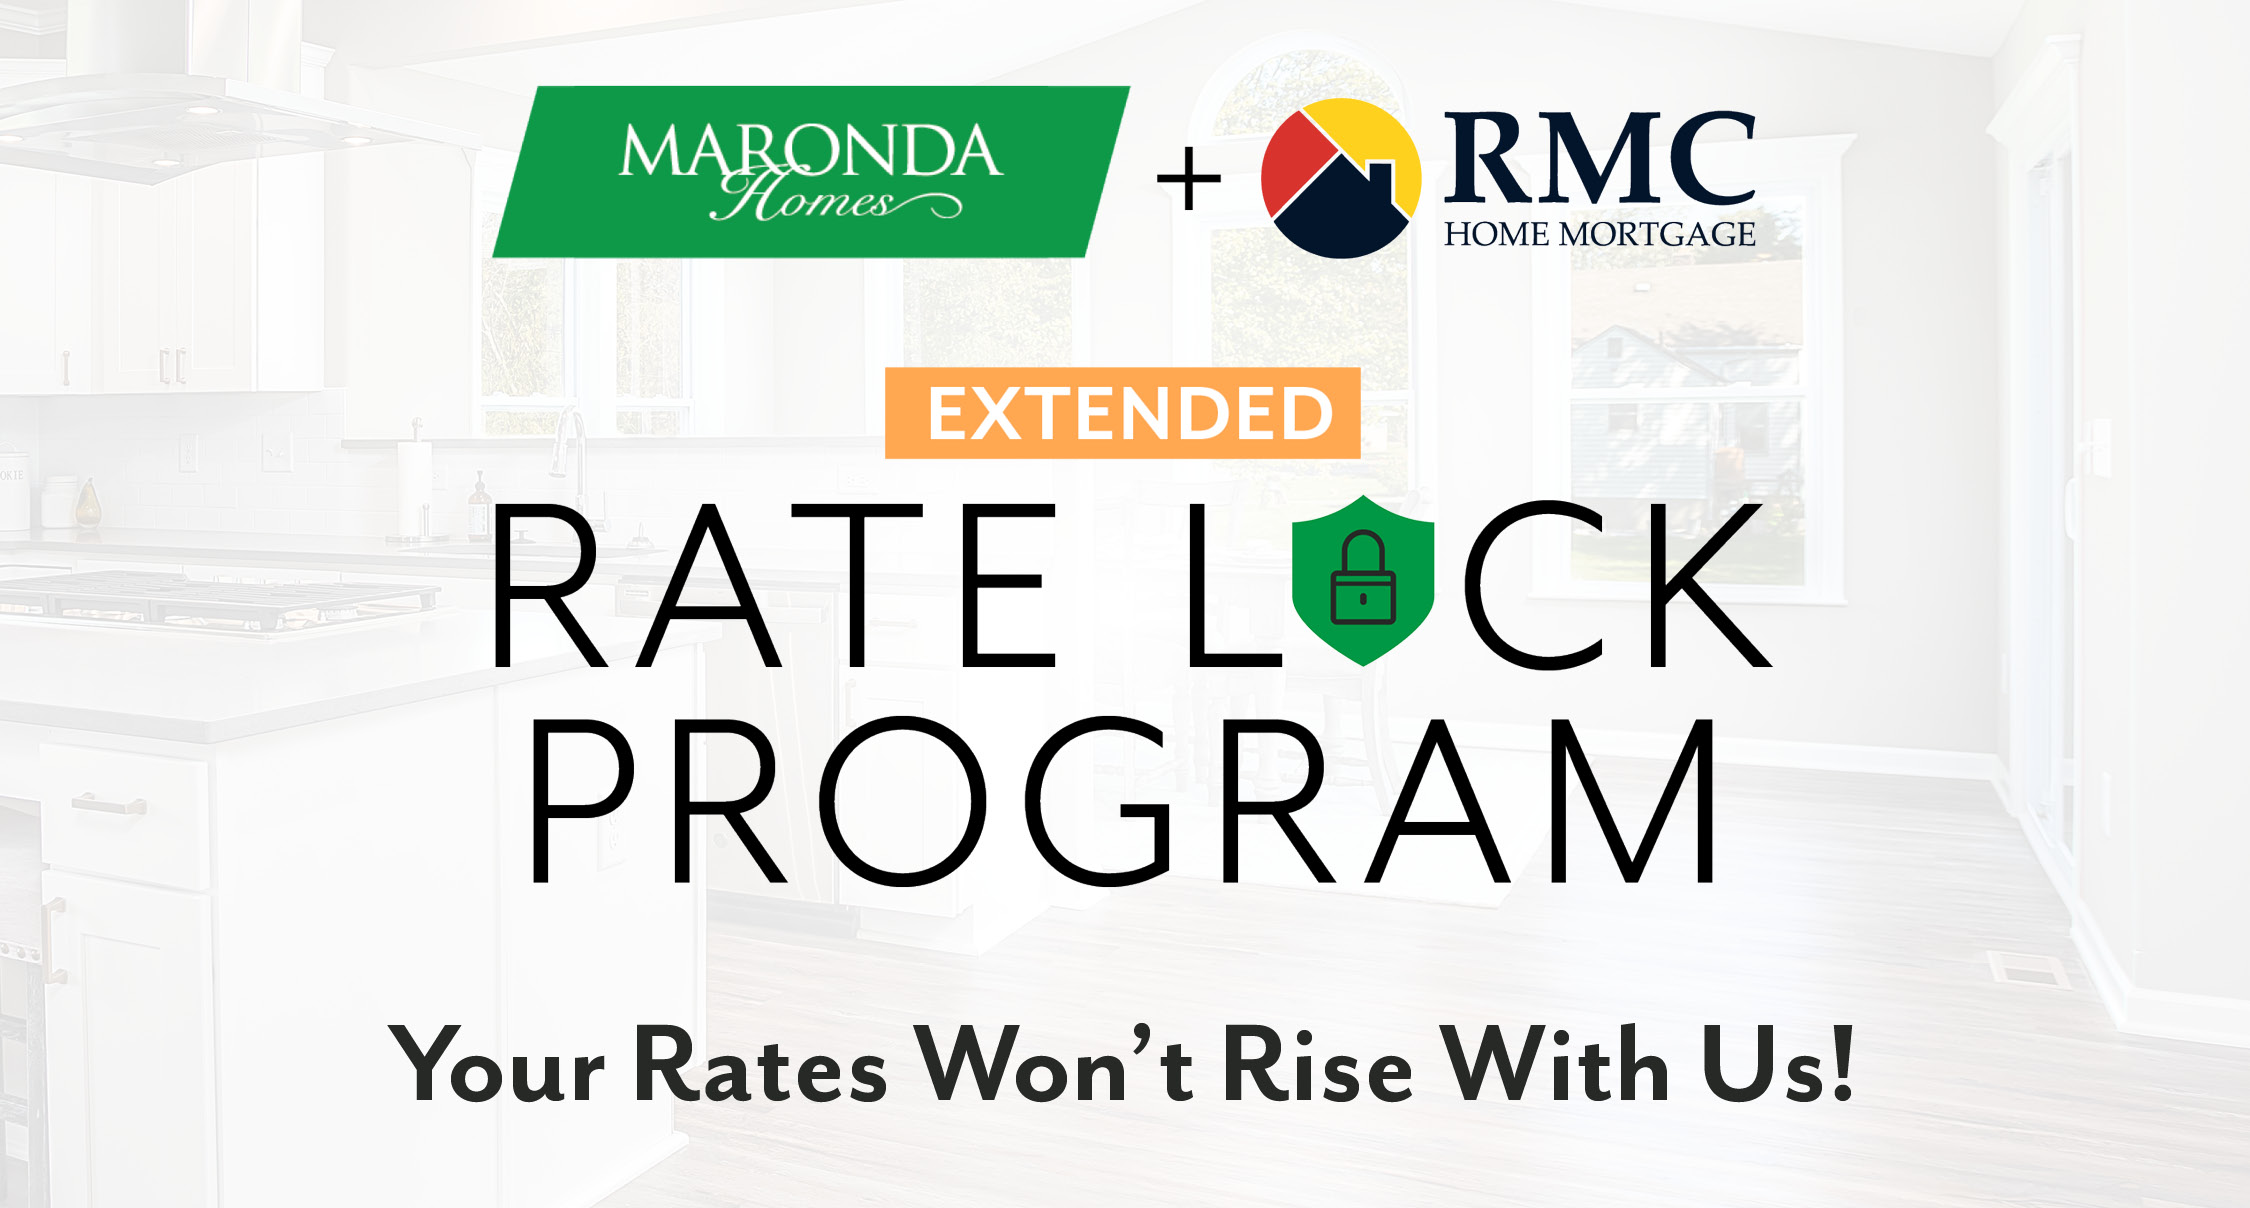 maronda-rmc-home-mortgage-extended-rate-lock-program-maronda-homes